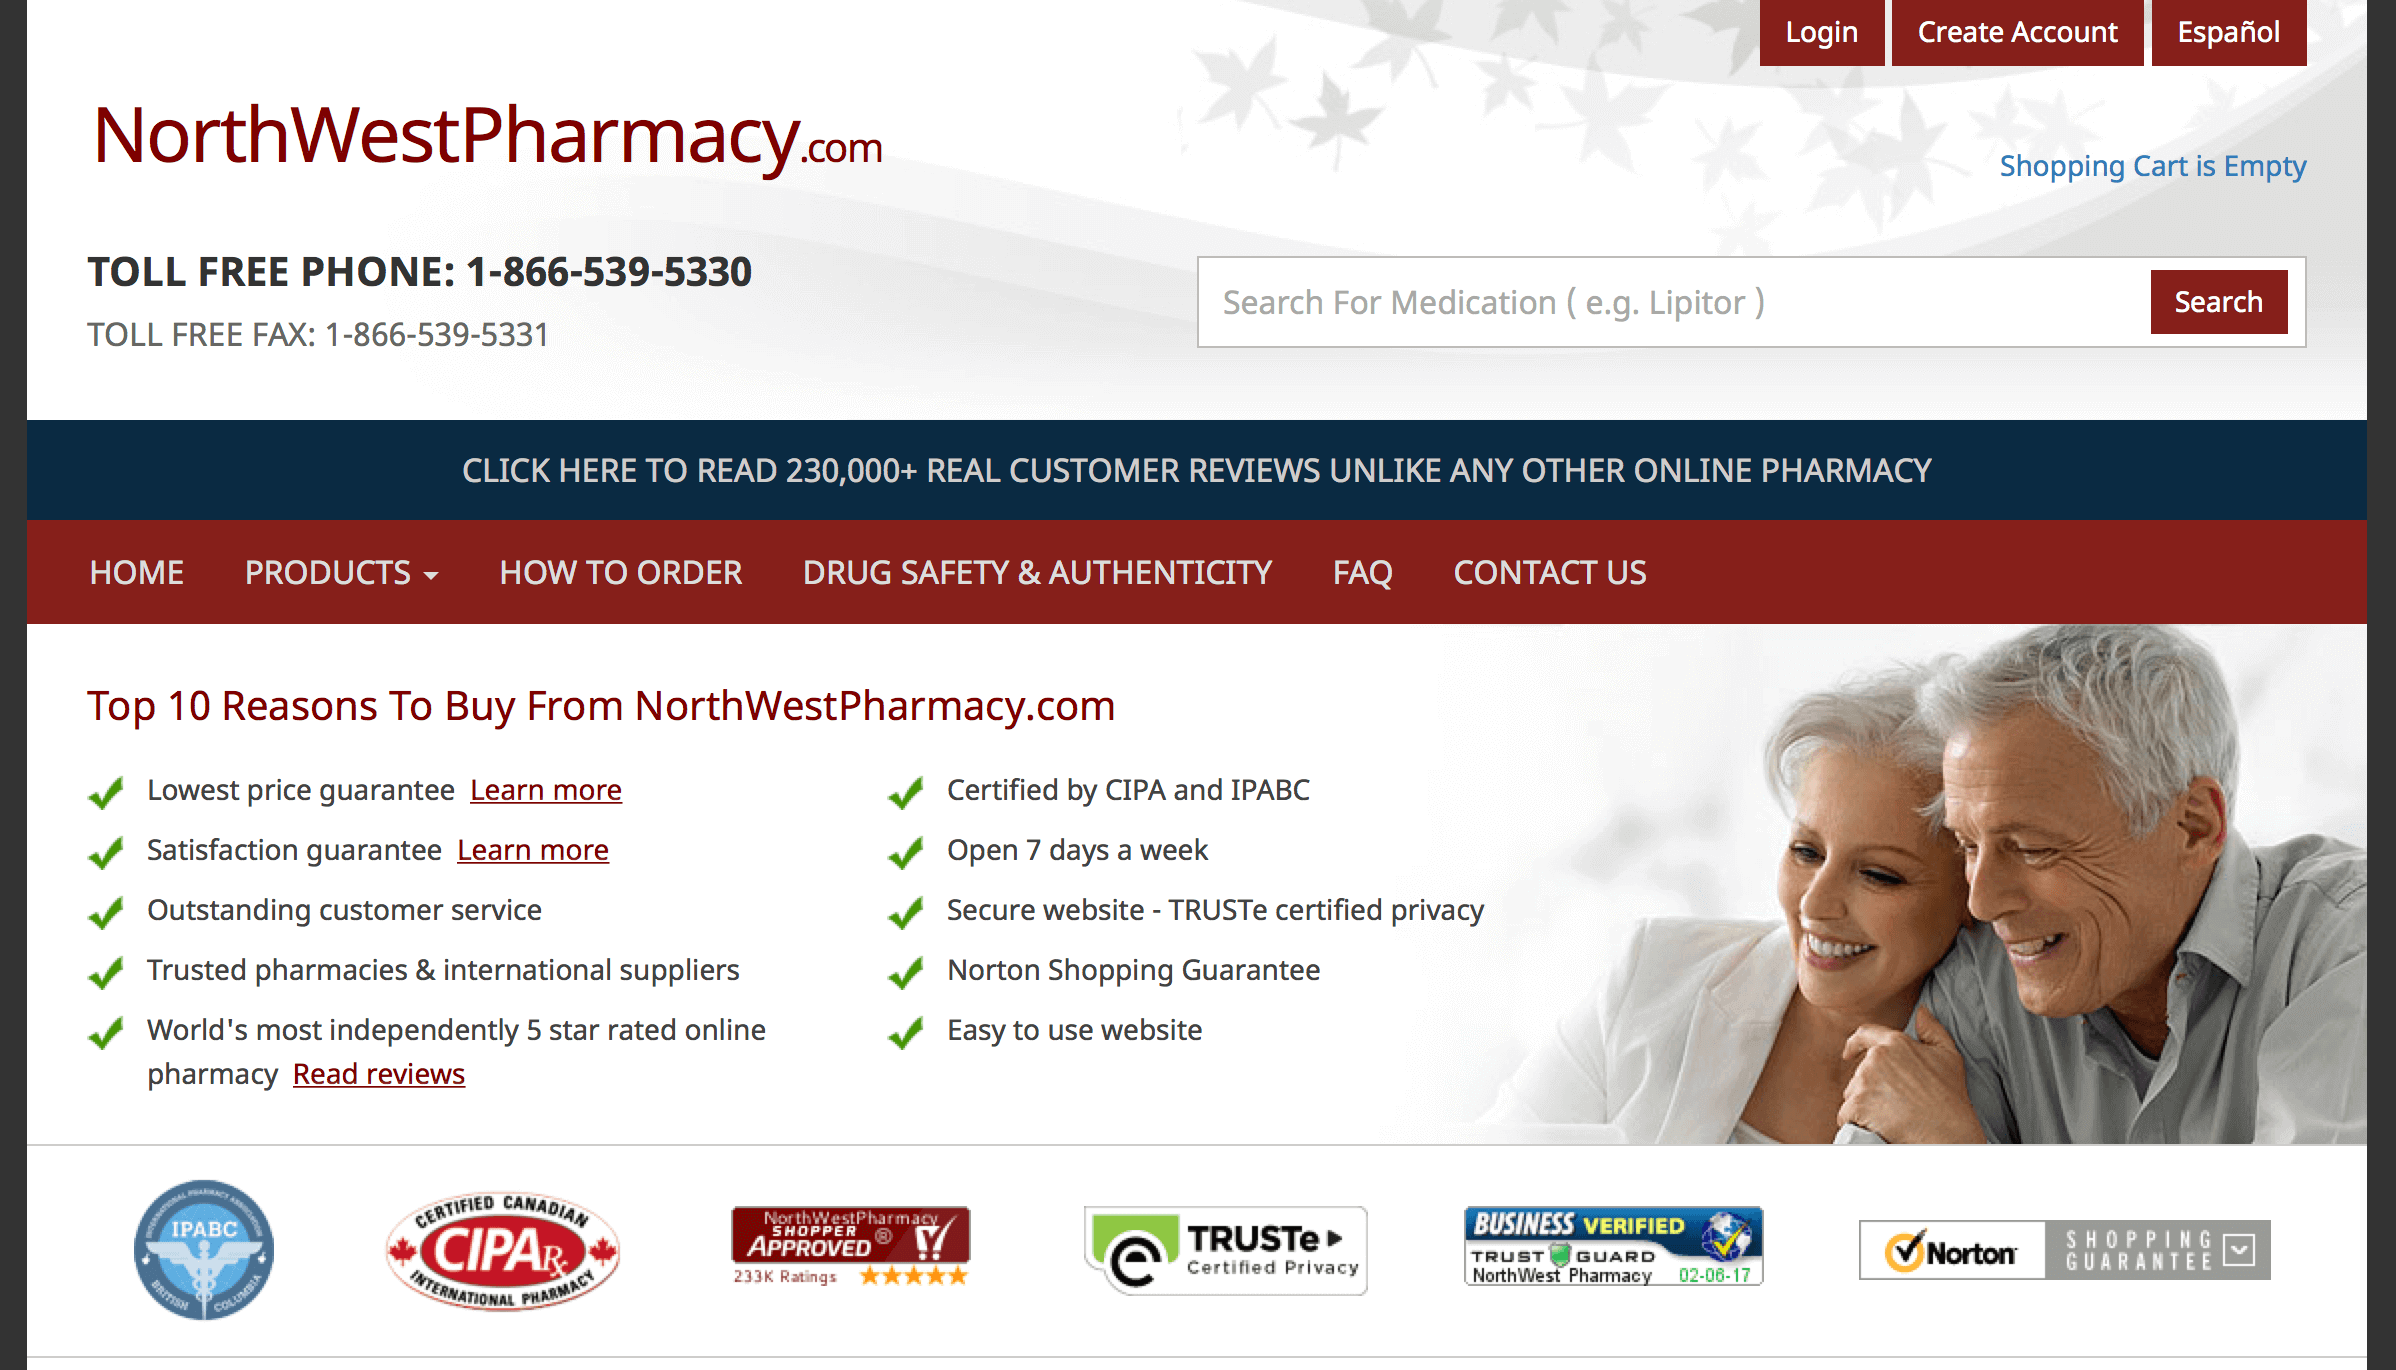 NorthwestPharmacy.com Pharmacy Review